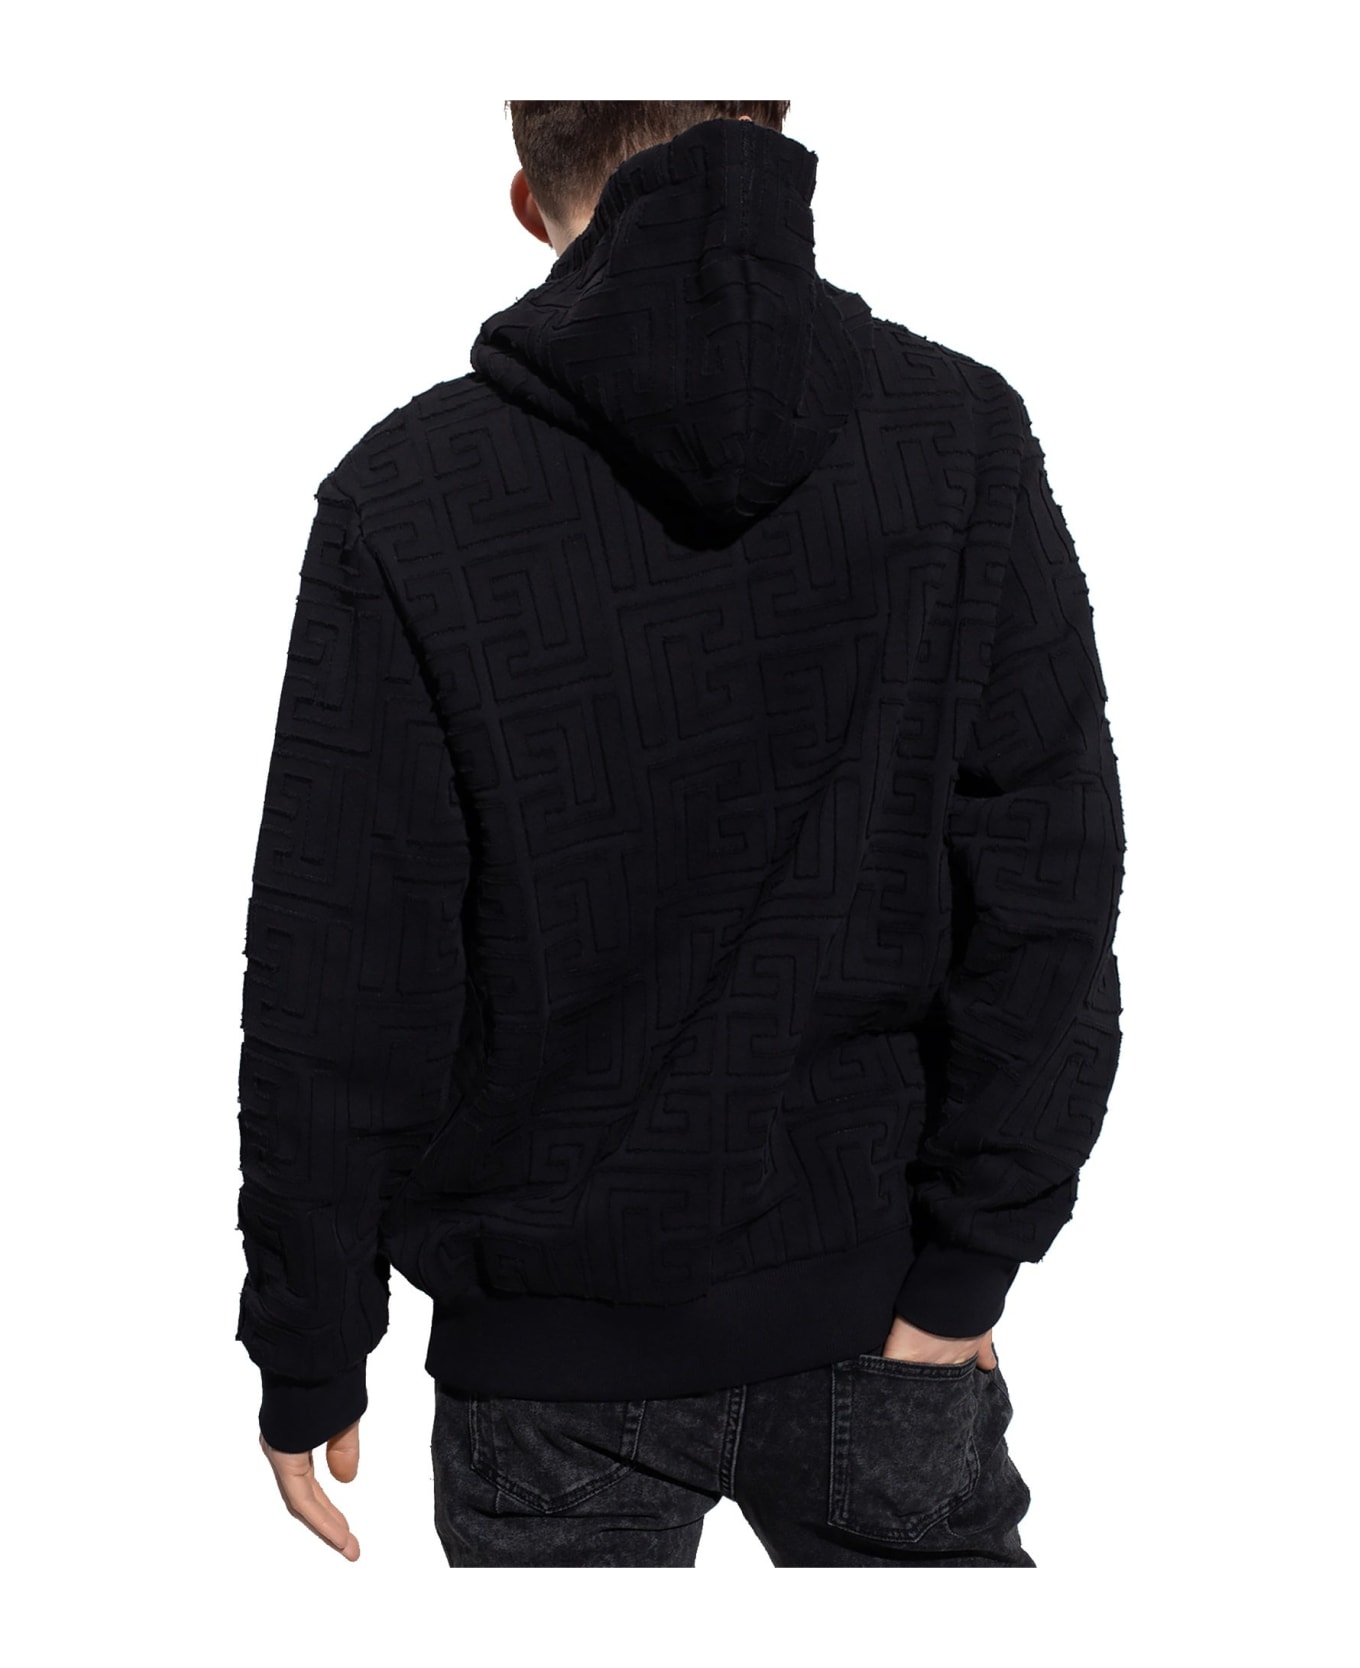 Balmain Monogrammed Hooded Sweatshirt - Black